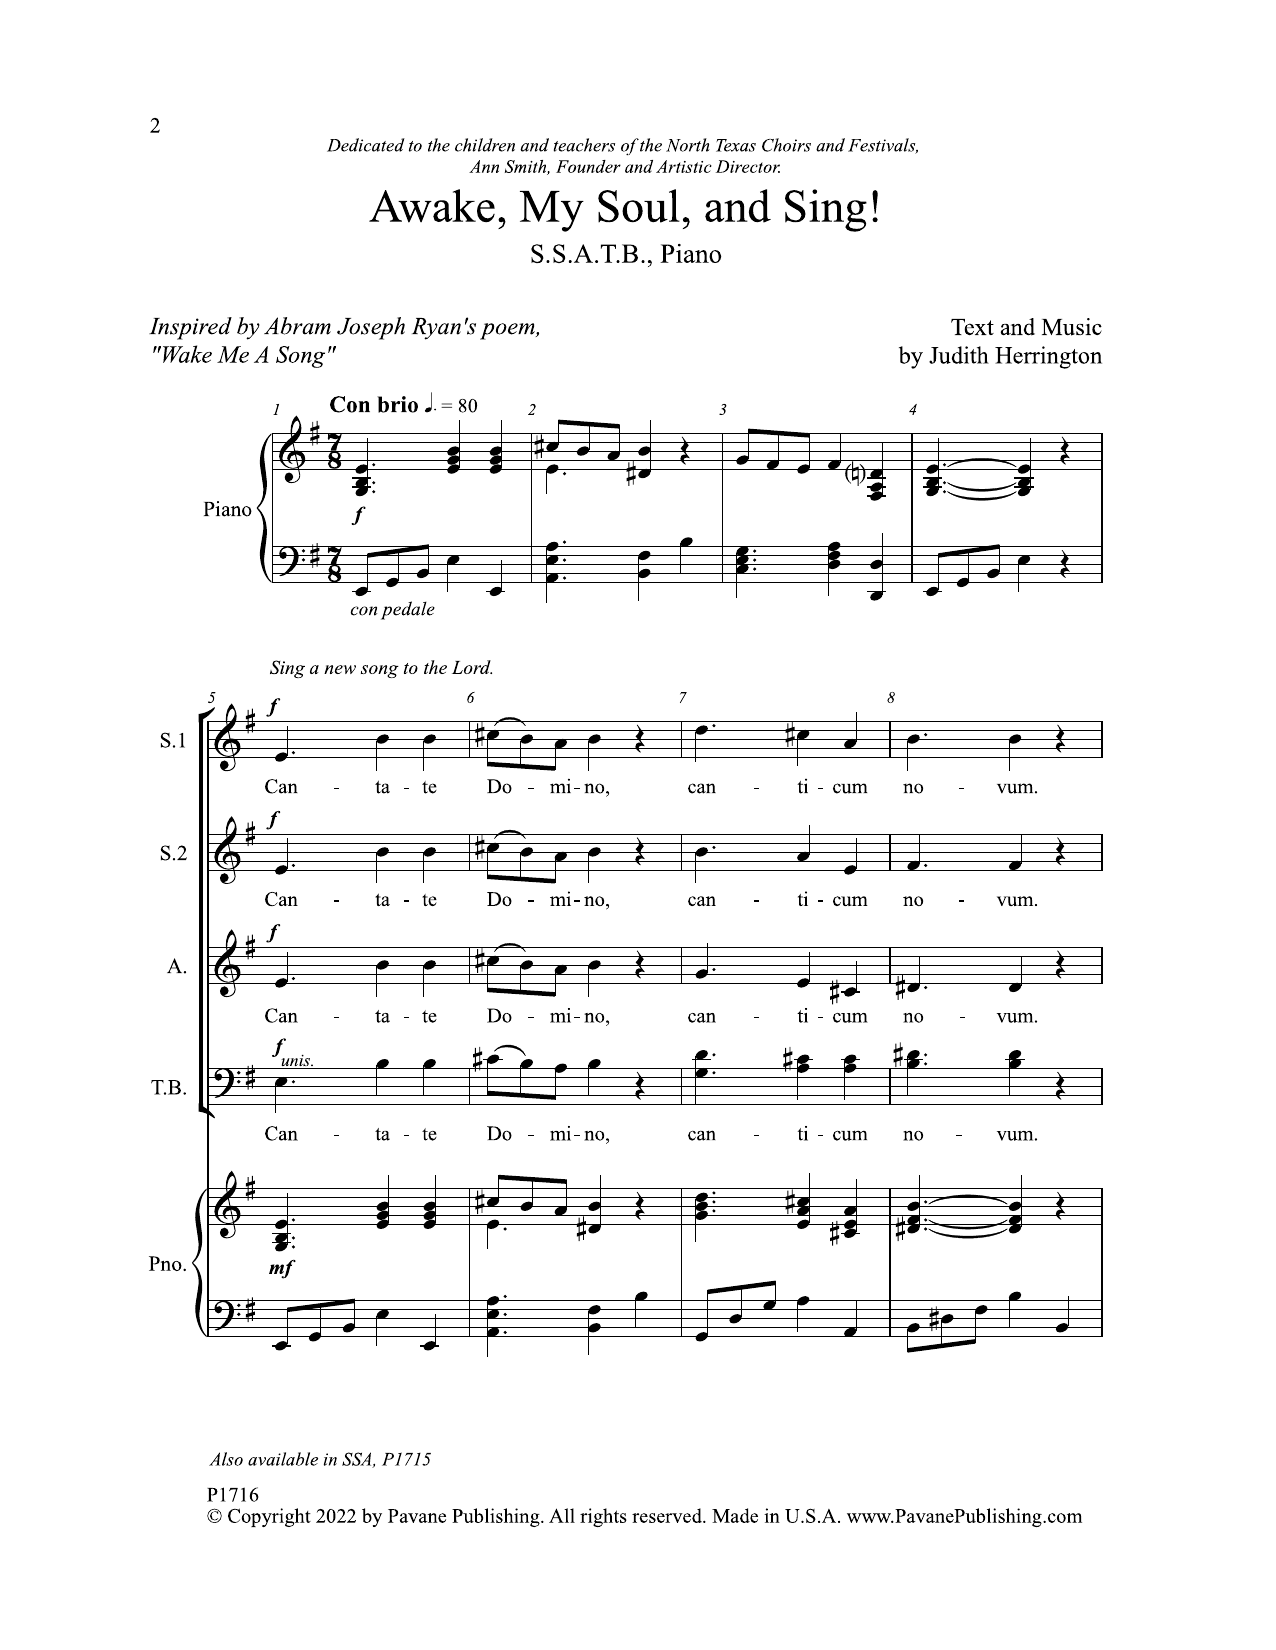 Judith Herrington Awake, My Soul, and Sing! Sheet Music Notes & Chords for SSATB Choir - Download or Print PDF